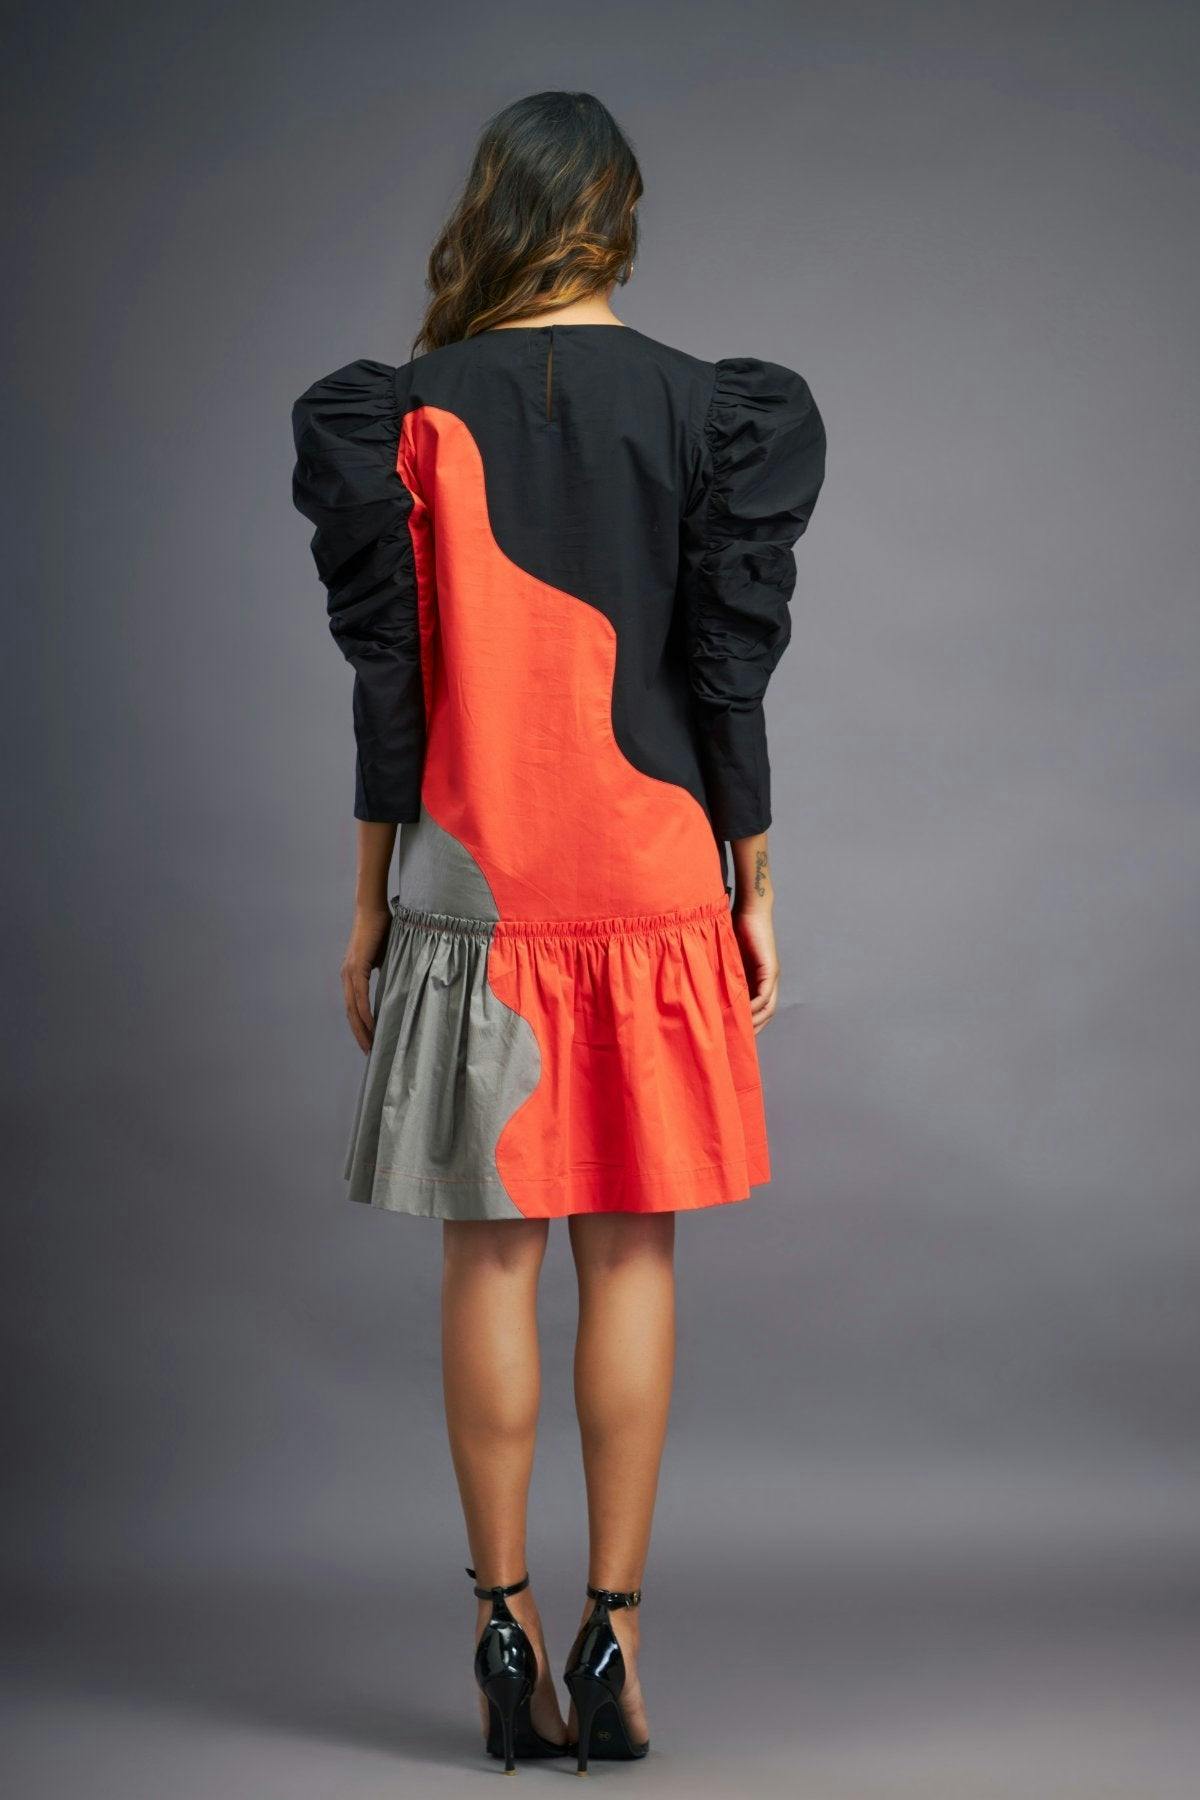 Thumbnail preview #1 for BB-1104-OG - Black Orange Short Dress With Frills